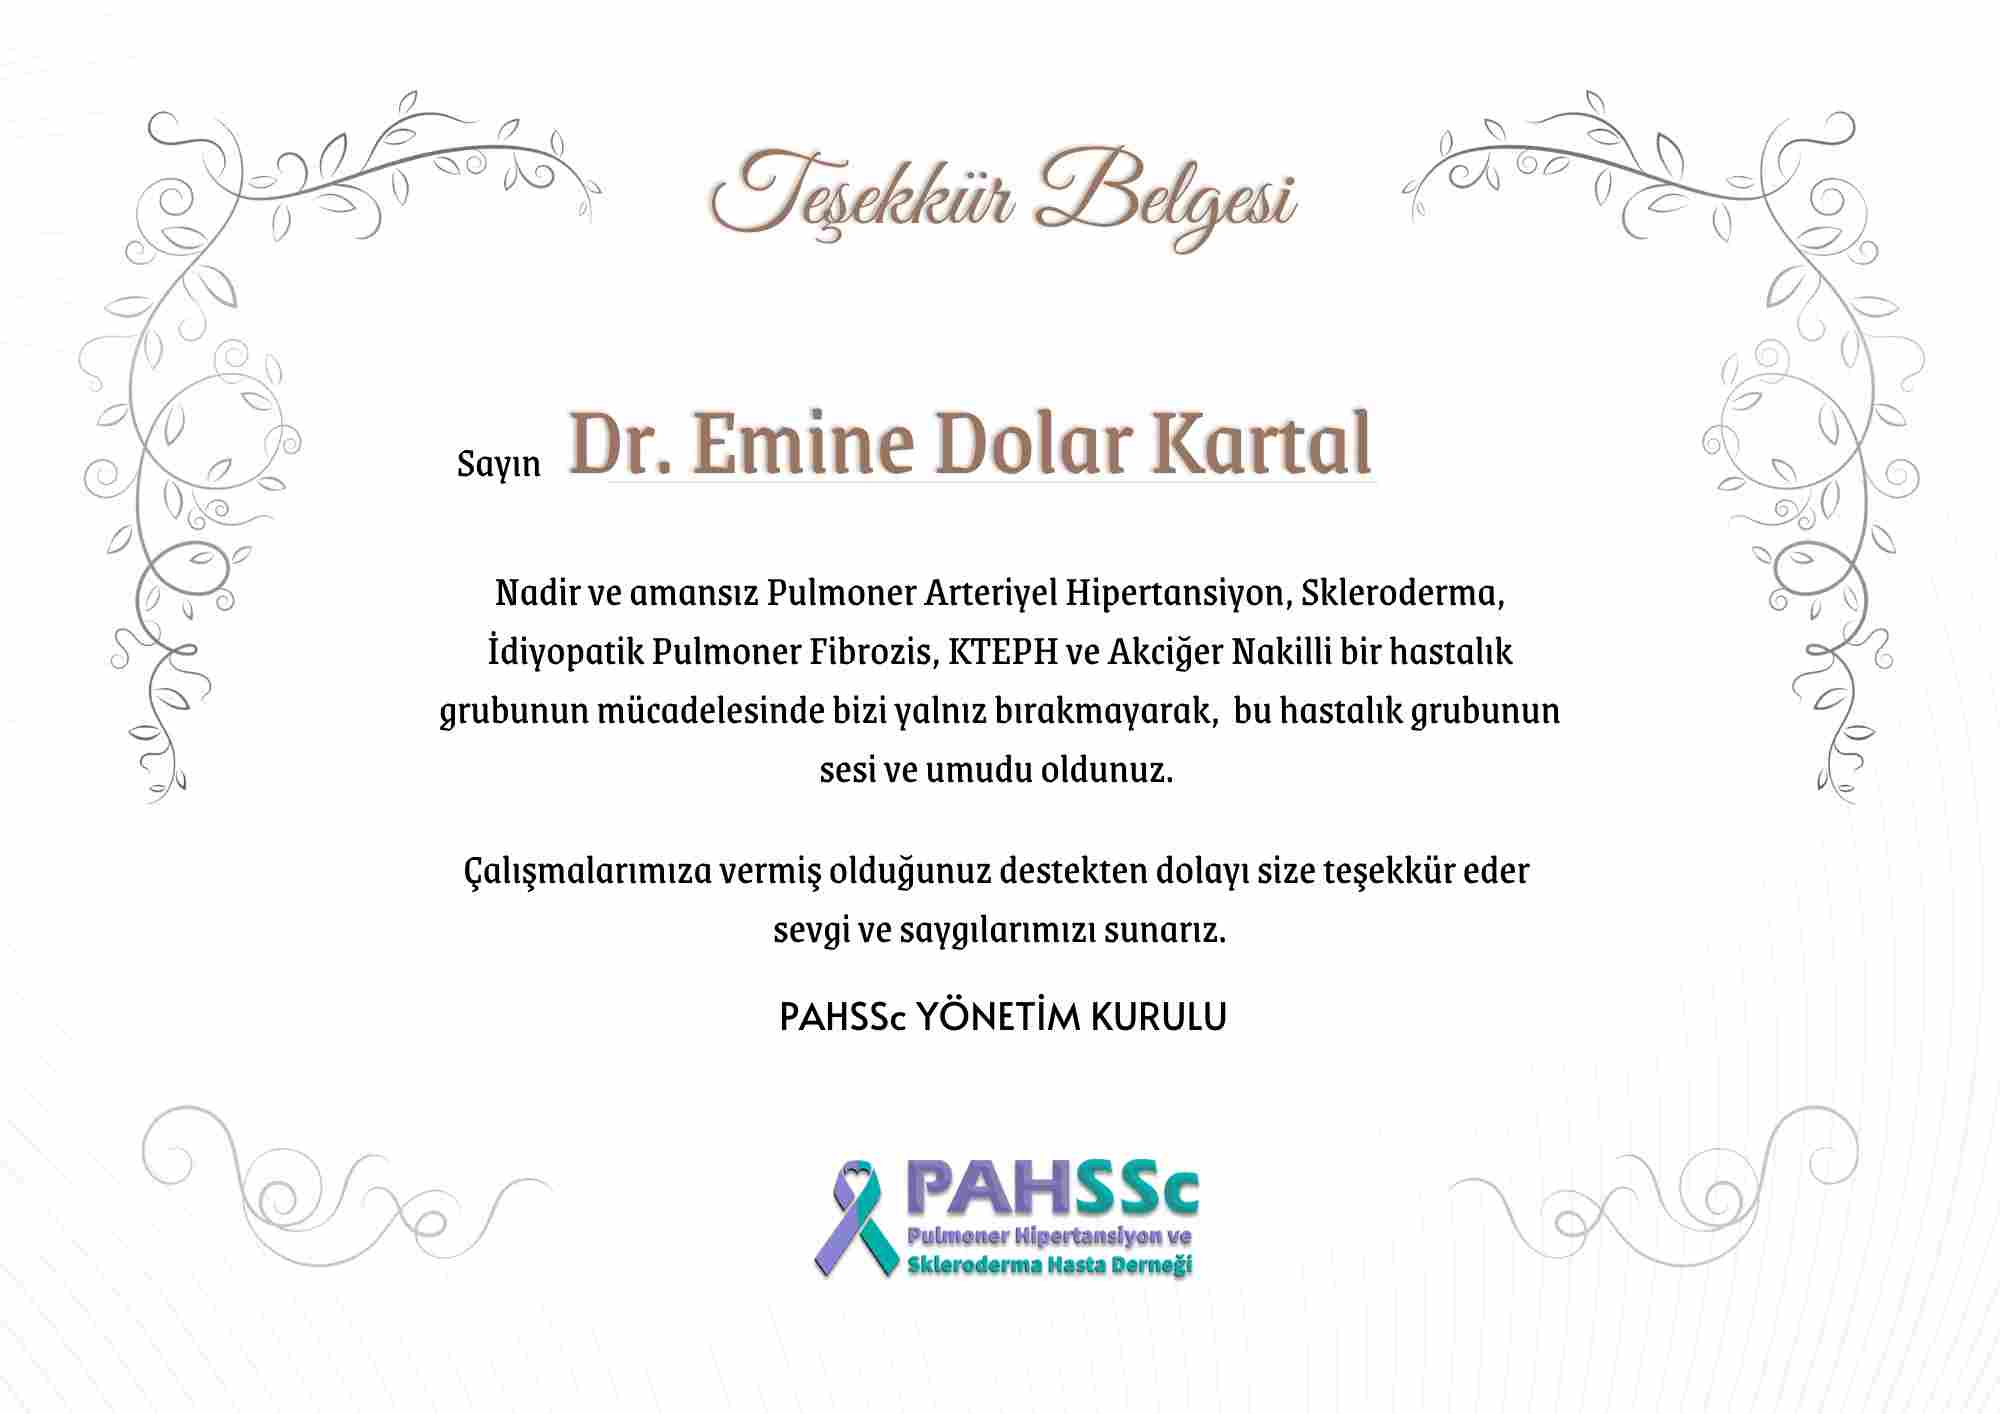 Dr. Emine Dolar Kartal